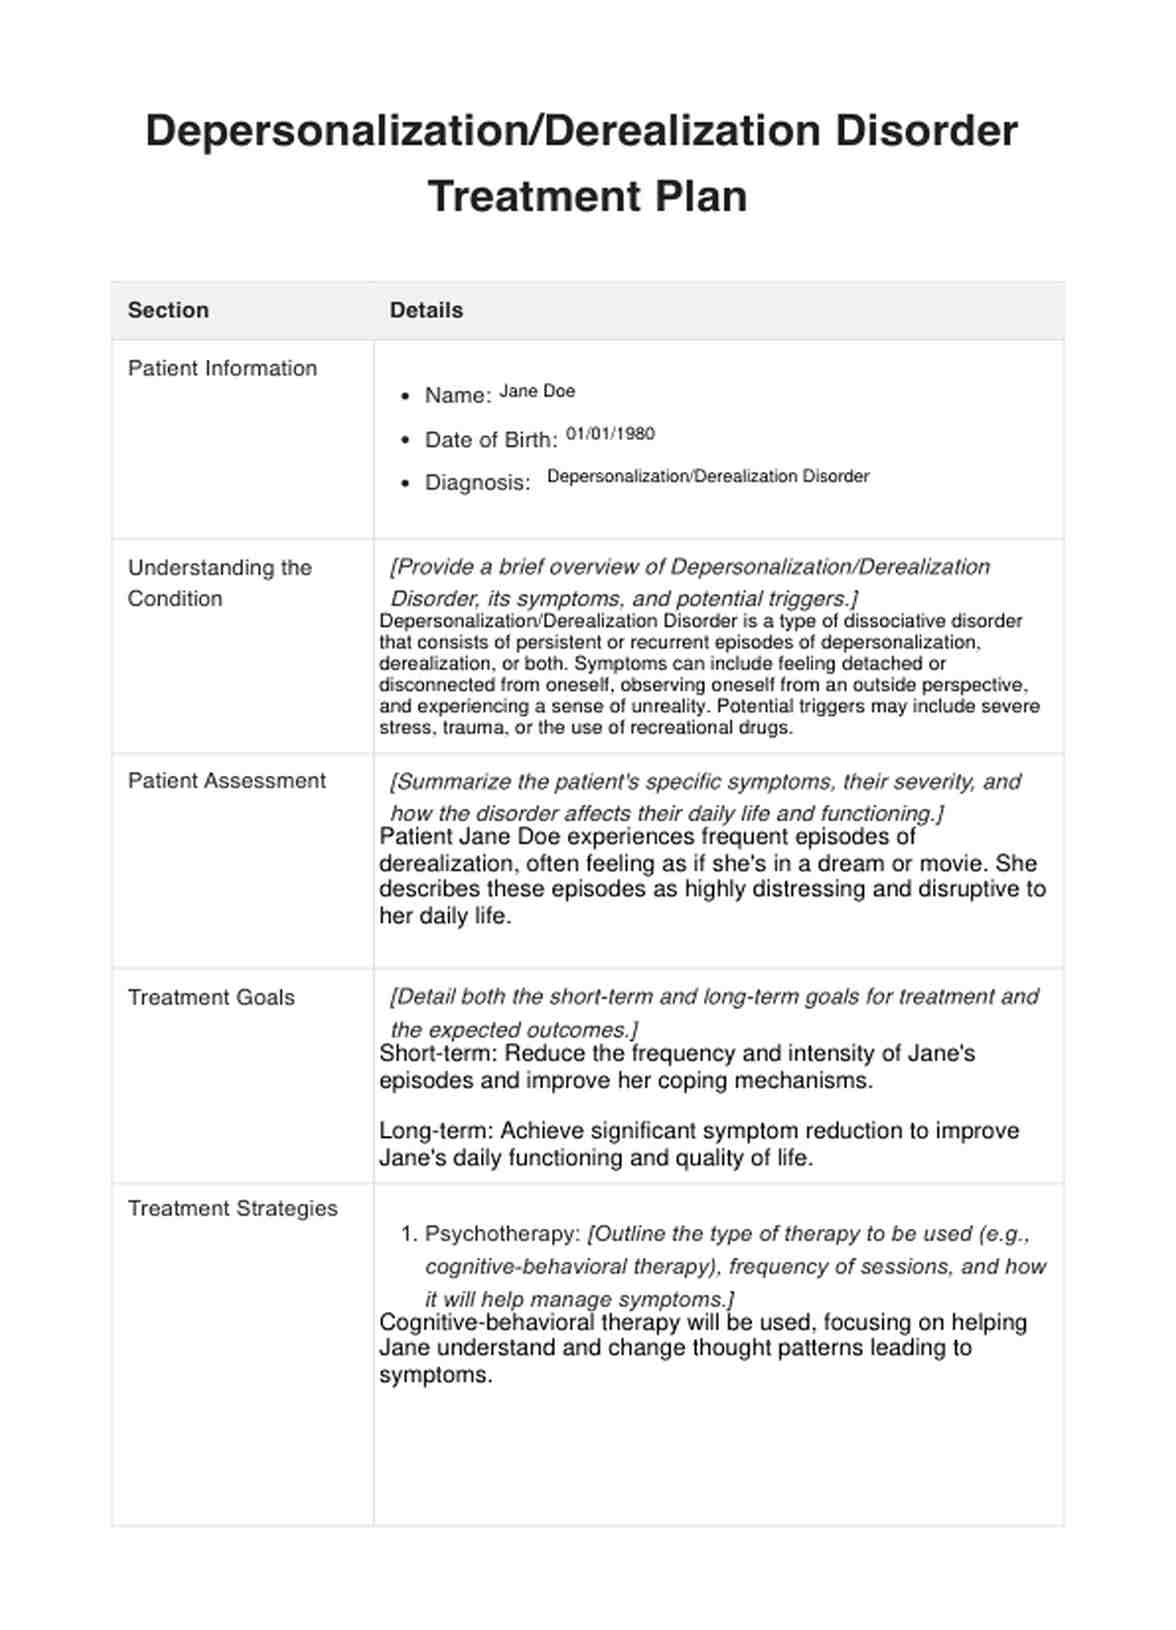 Depersonalization/Derealization Disorder Treatment Plan PDF Example